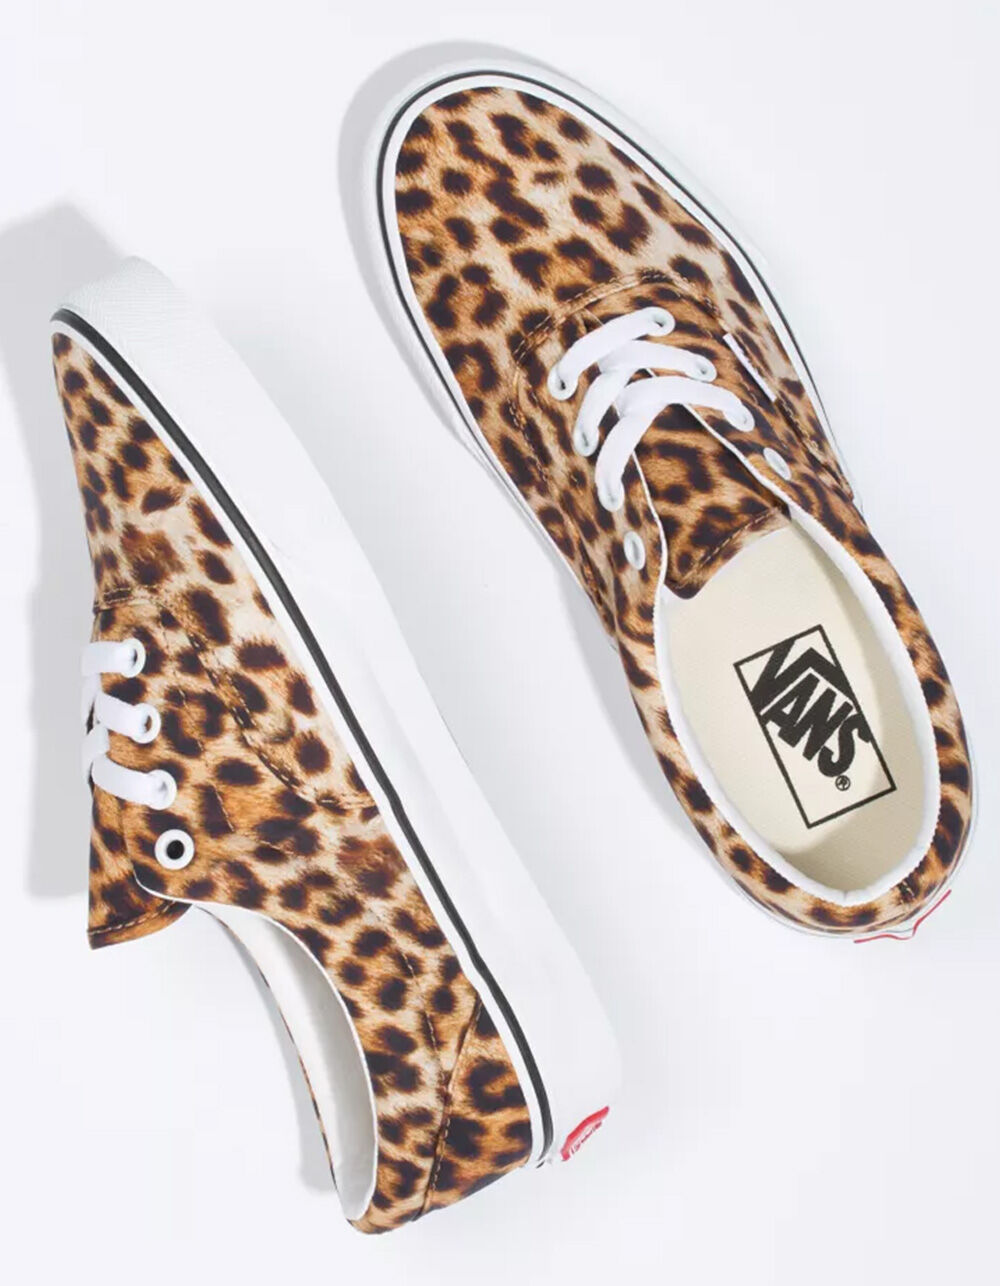 VANS Leopard Era Womens Shoes - LEOPARD | Tillys